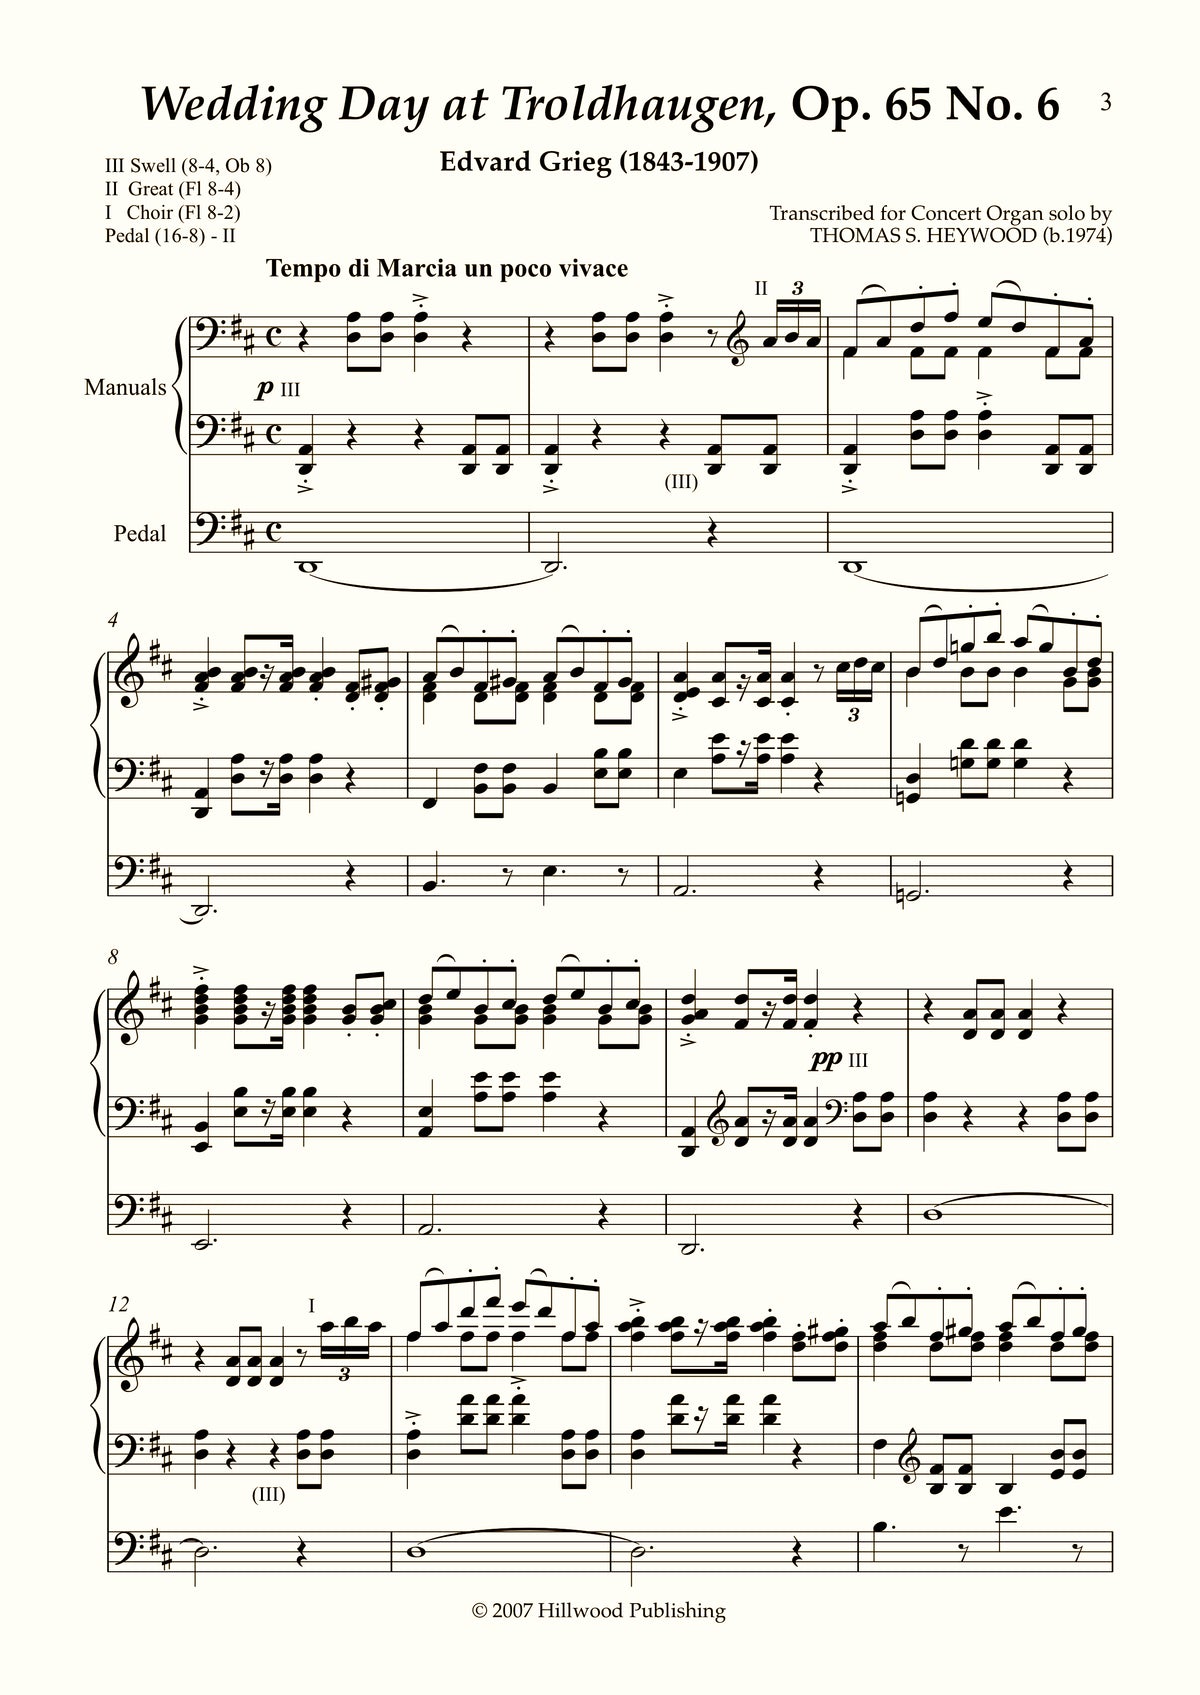 Grieg/Heywood - Wedding Day at Troldhaugen from the Lyric Pieces, Op. 65 No. 6 (Score) | Thomas Heywood | Concert Organ International